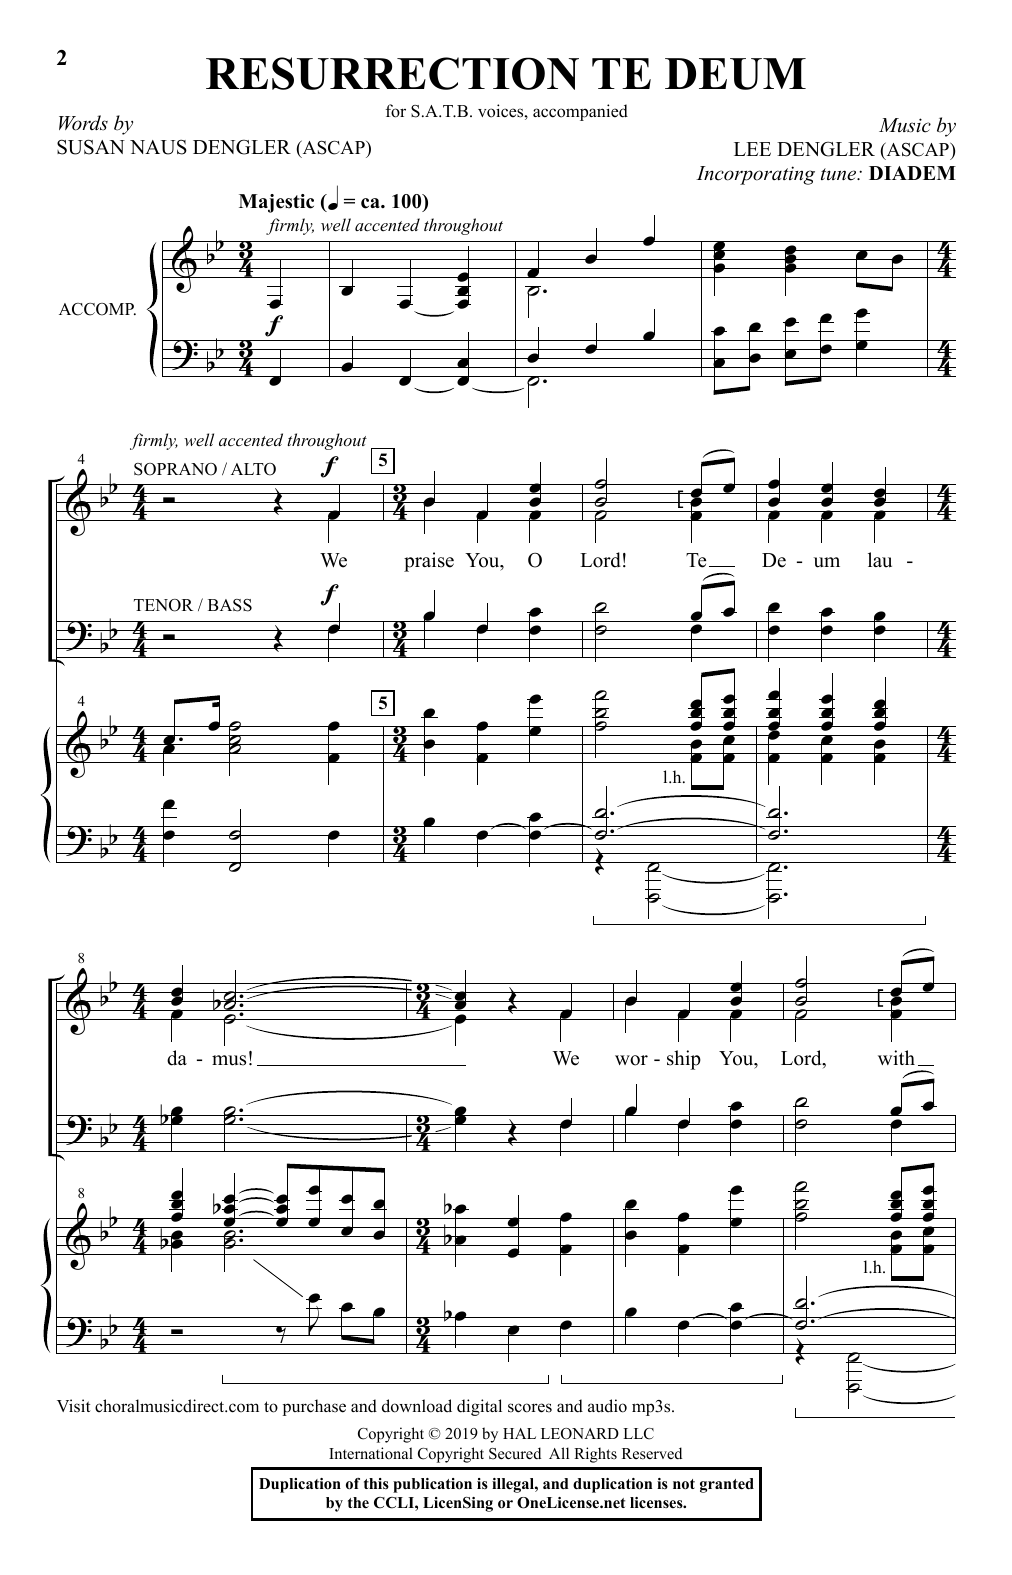 Susan Naus Dengler and Lee Dengler Resurrection Te Deum Sheet Music Notes & Chords for SATB Choir - Download or Print PDF